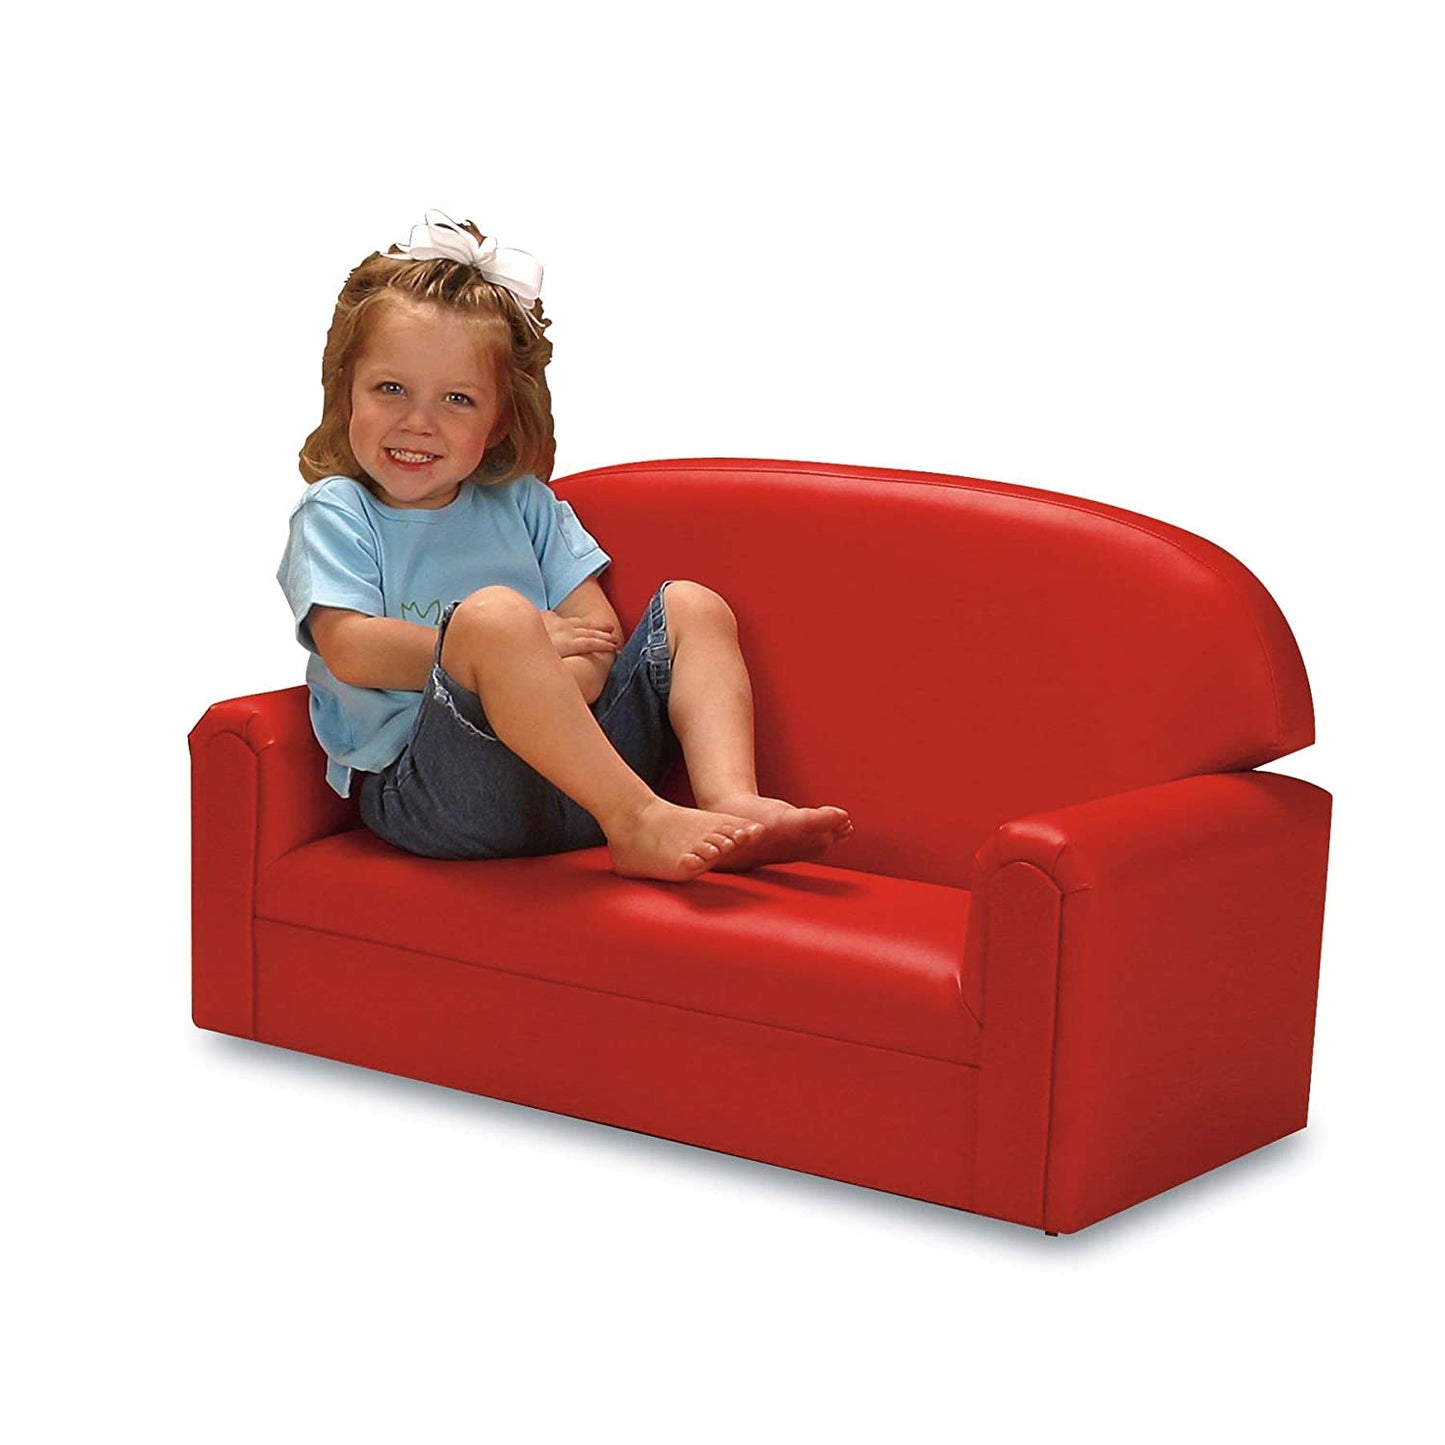 BN-FIVR100 Red Sofa, Vinyl, Infant Toddler 34"L X 16"W  X 19"H